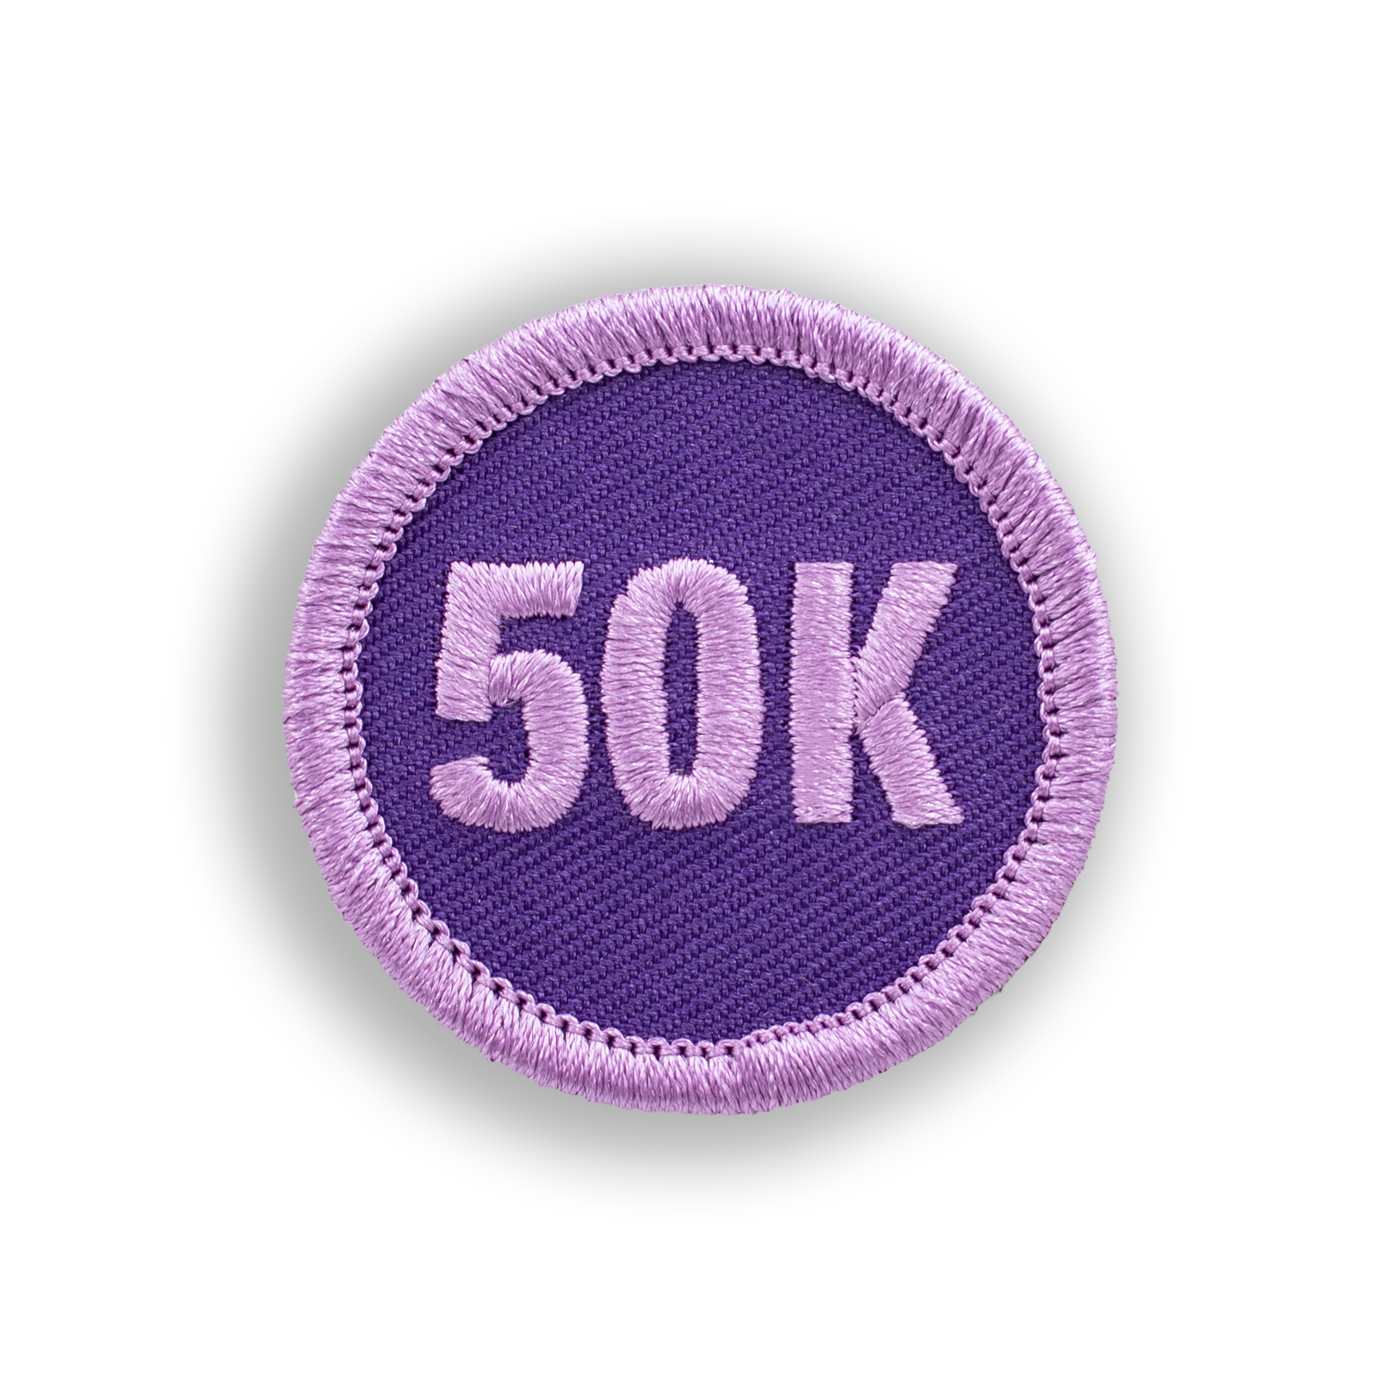 50K Ultra Runner Patch - Demerit Wear - Fake Merit Badges